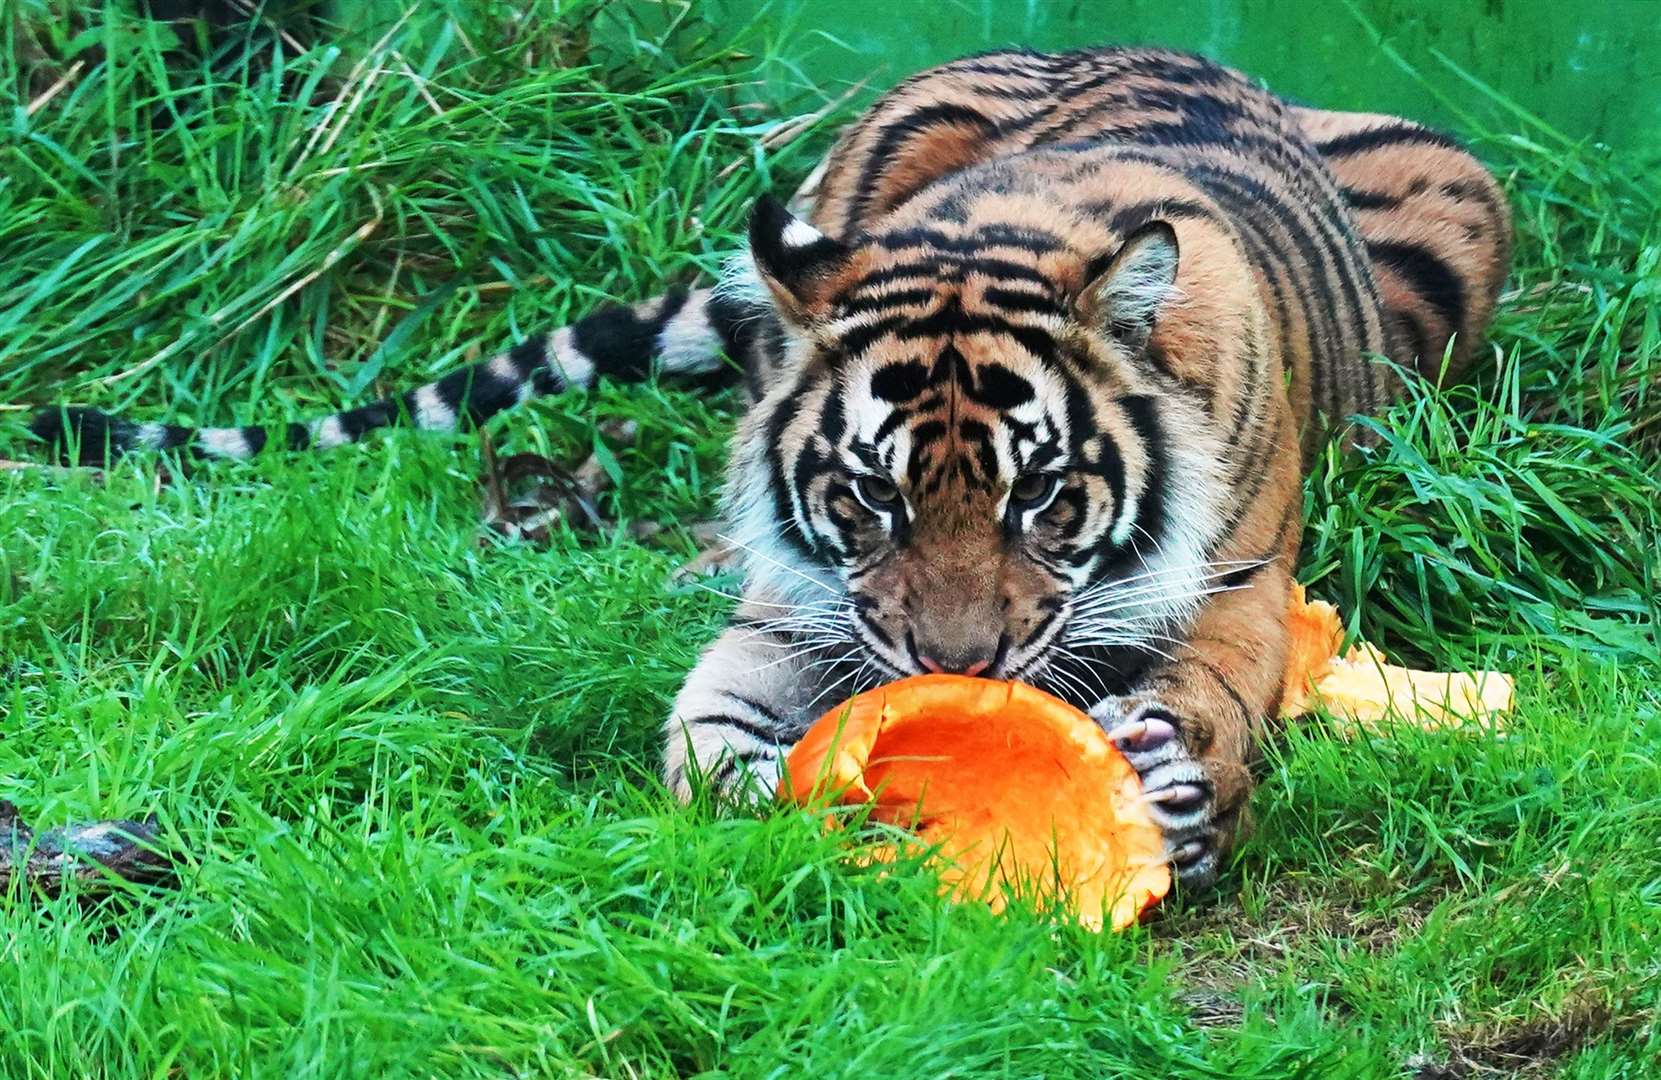 A Sumatran tiger enjoys its Halloween pumpkin (Jonathan Brady/PA)